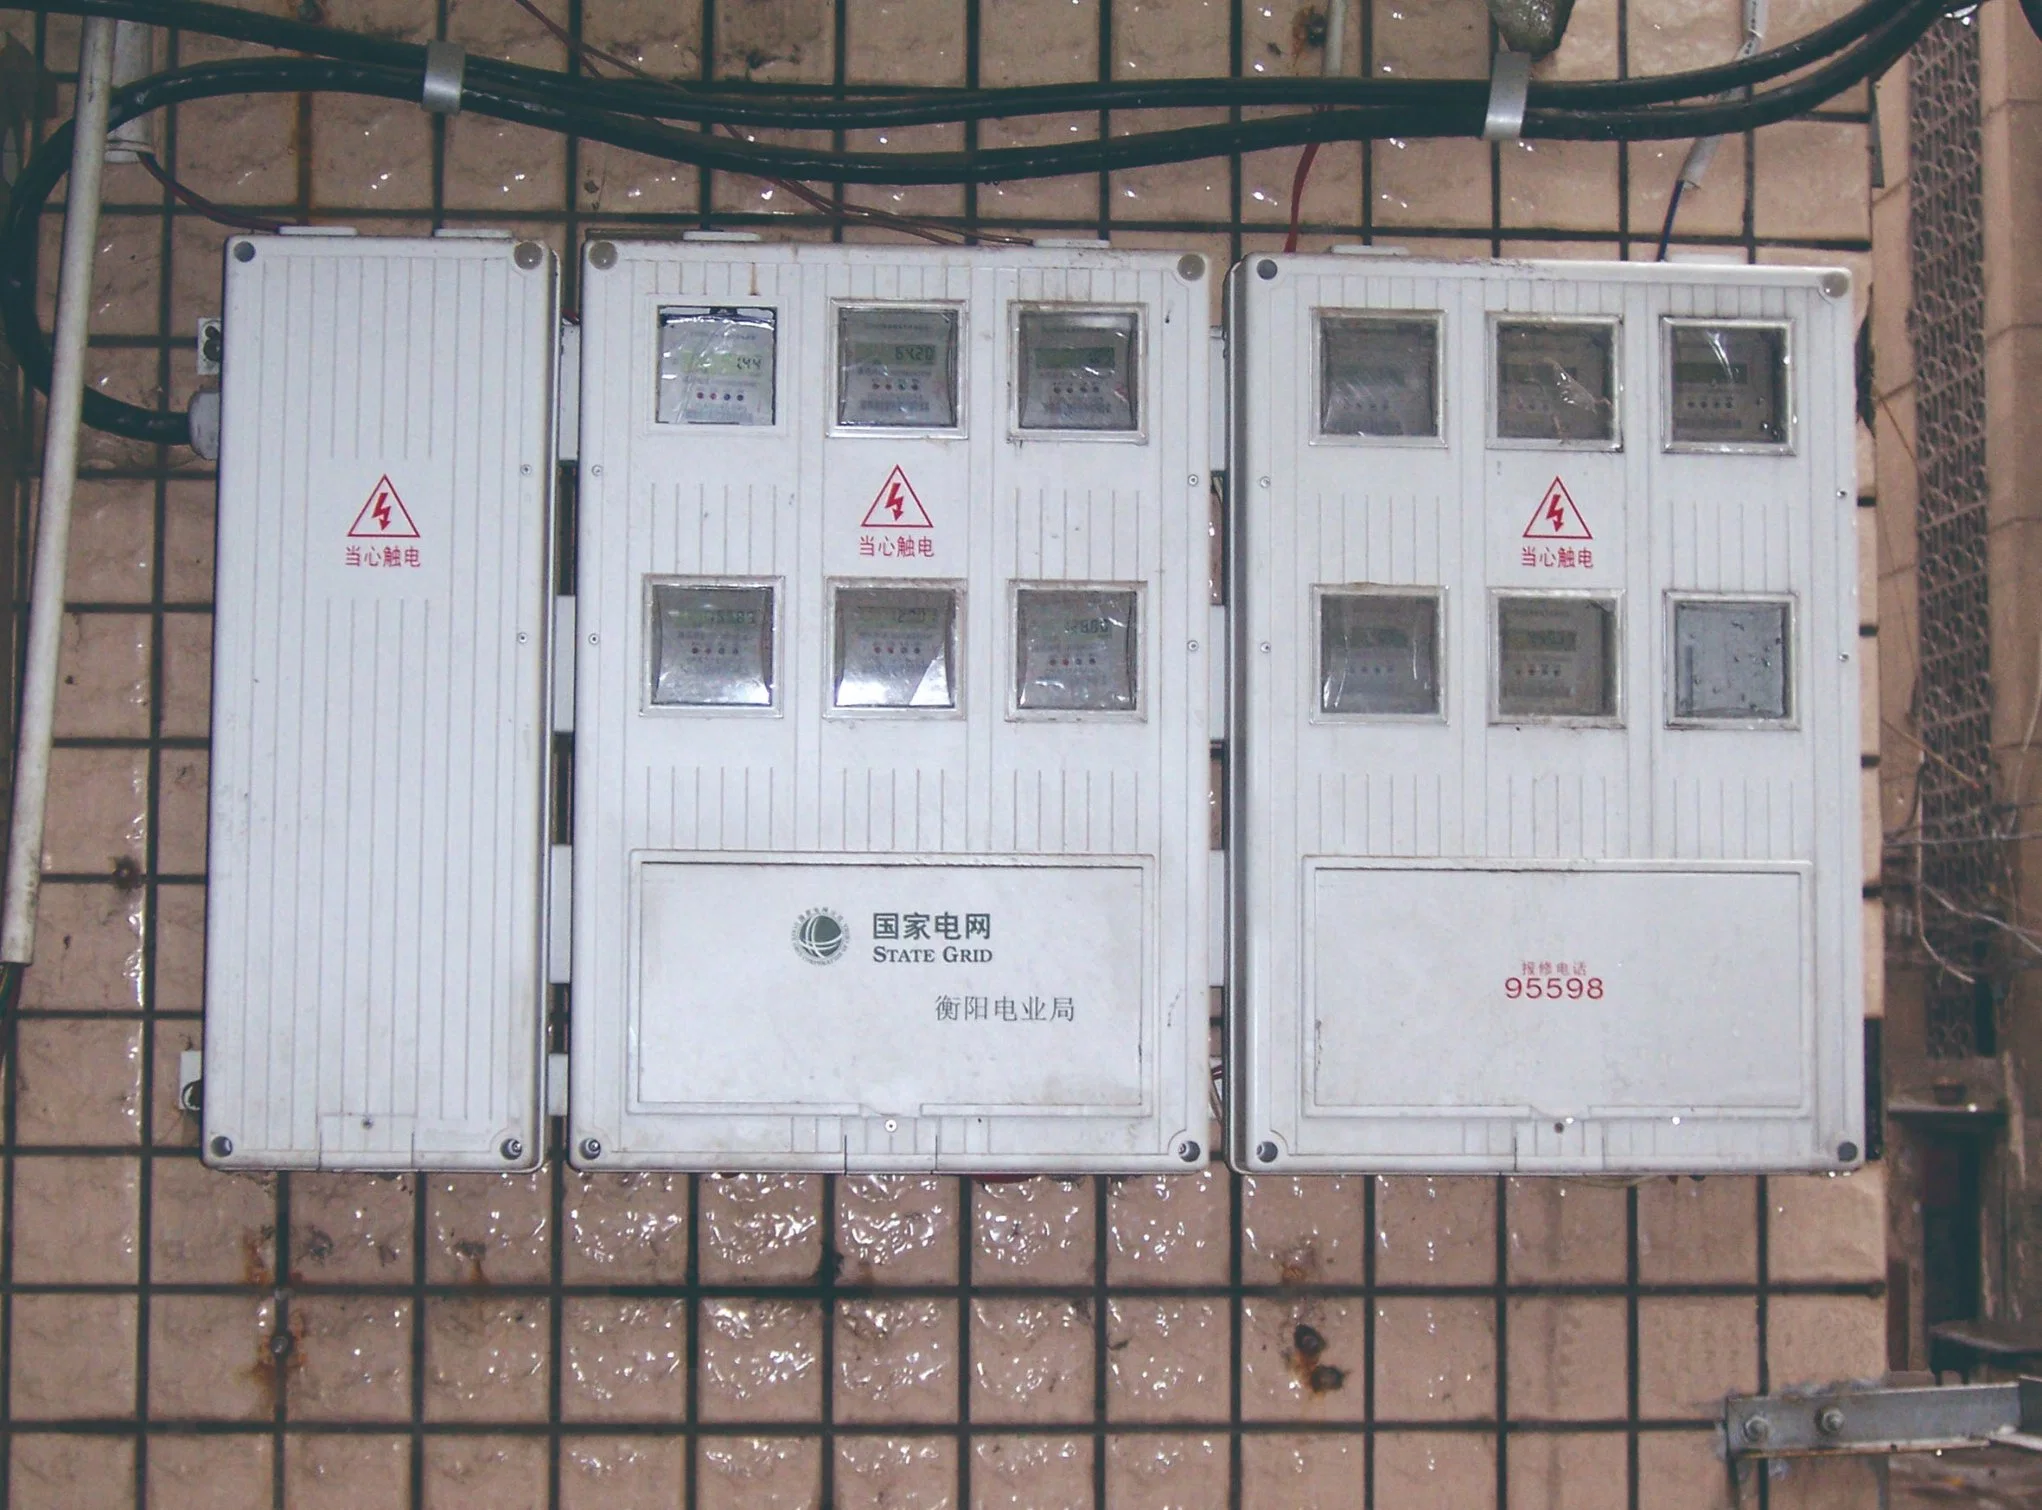 SMC Single Phase Electric Power Meter Box